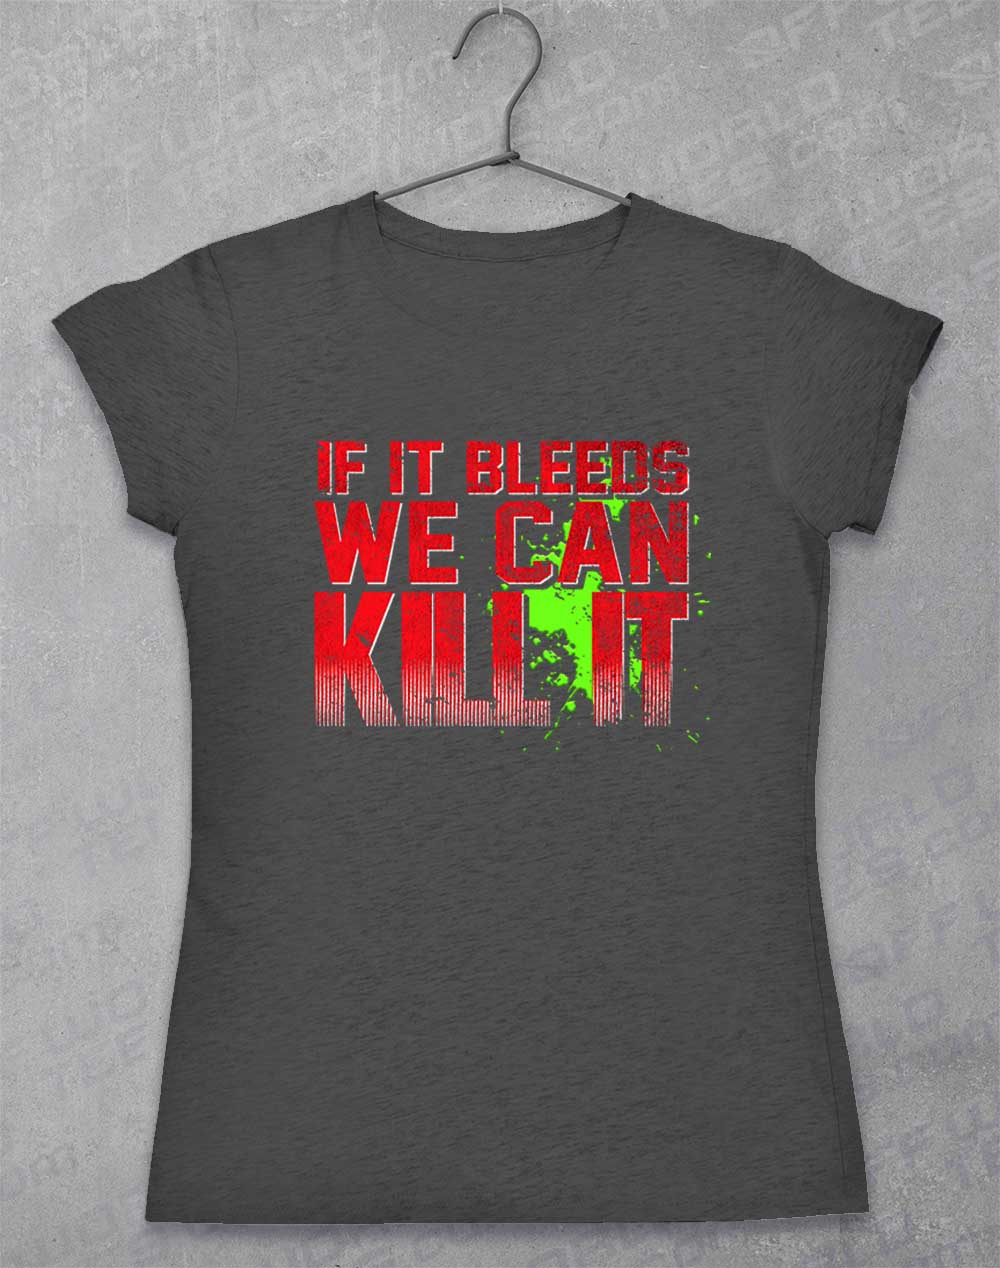 Dark Heather - If It Bleeds We Can Kill It Women's T-Shirt